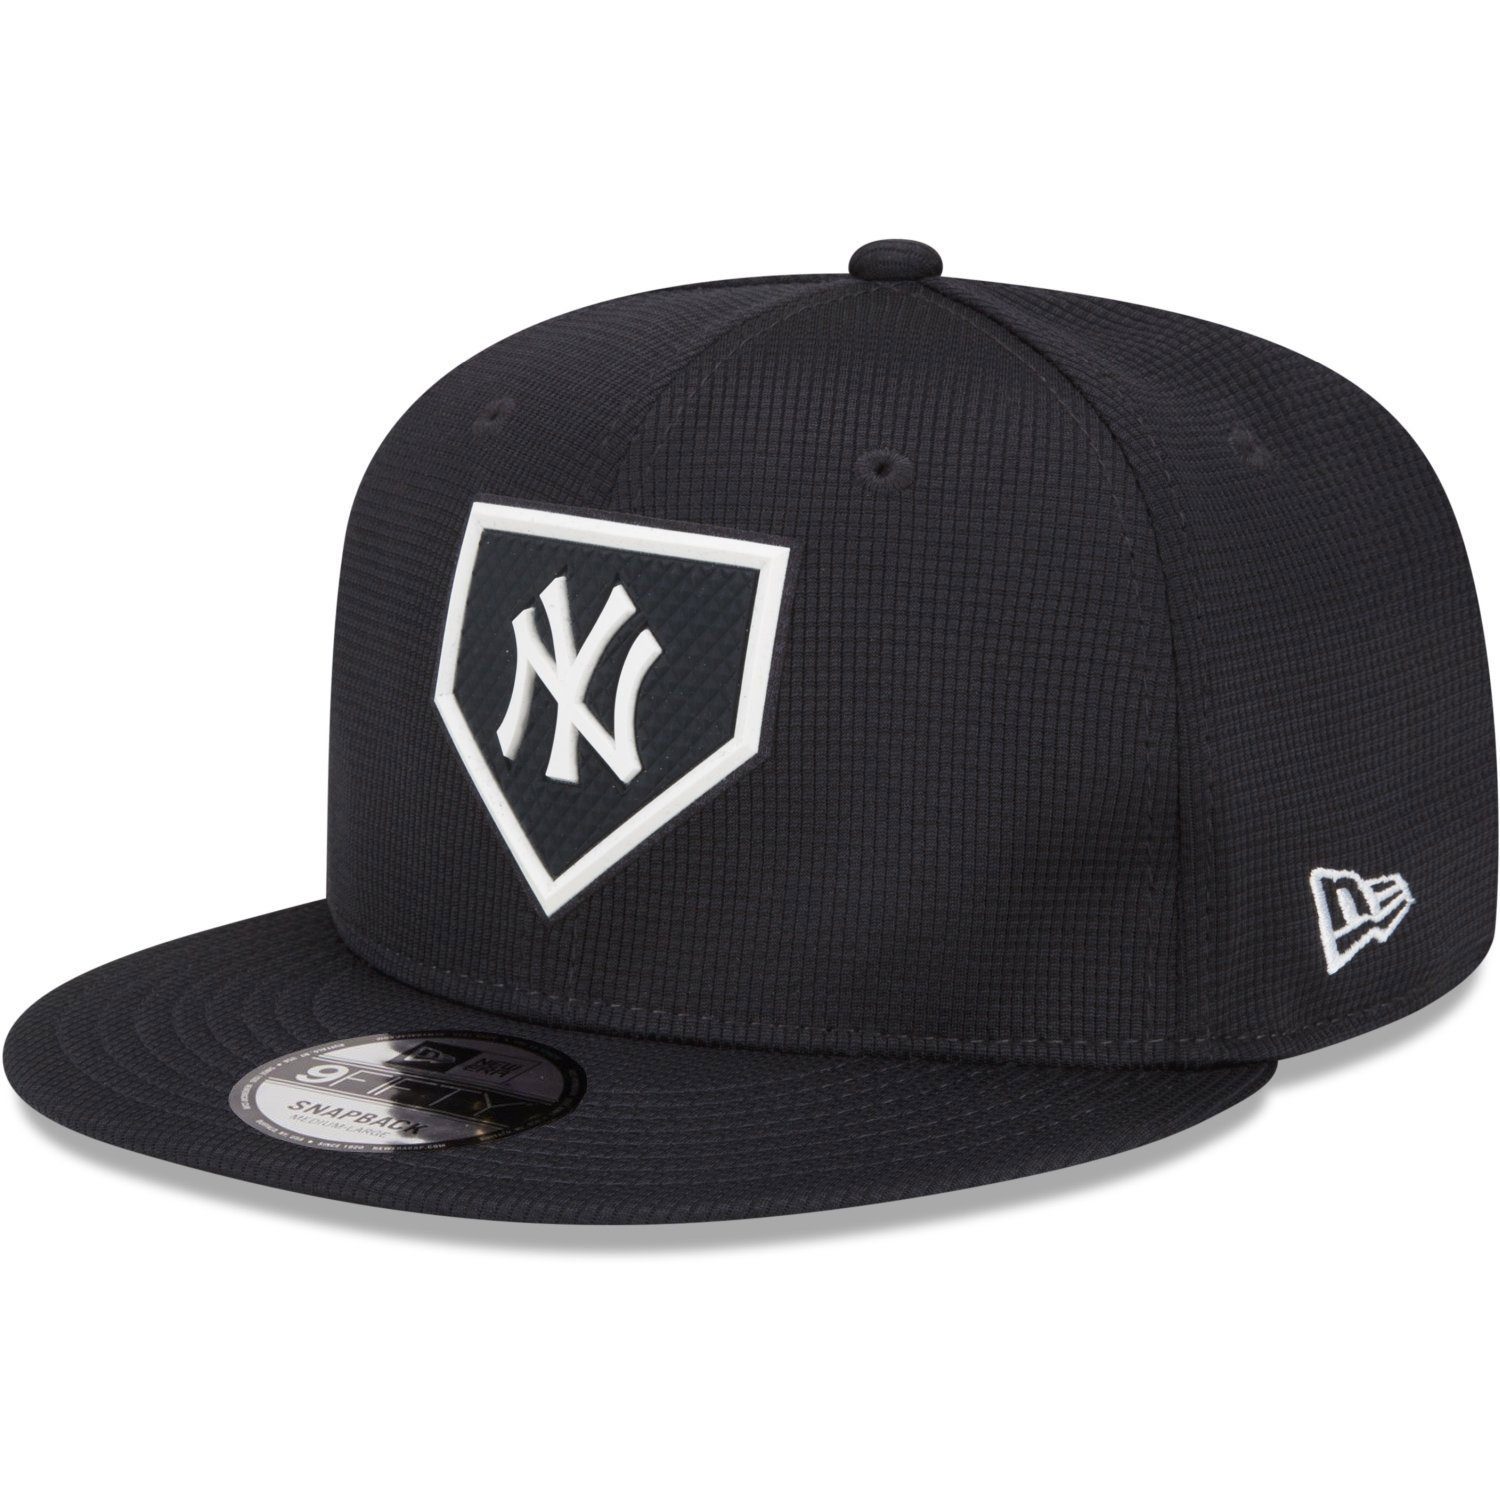 New Era Snapback Cap 9FIFTY CLUBHOUSE New York Yankees